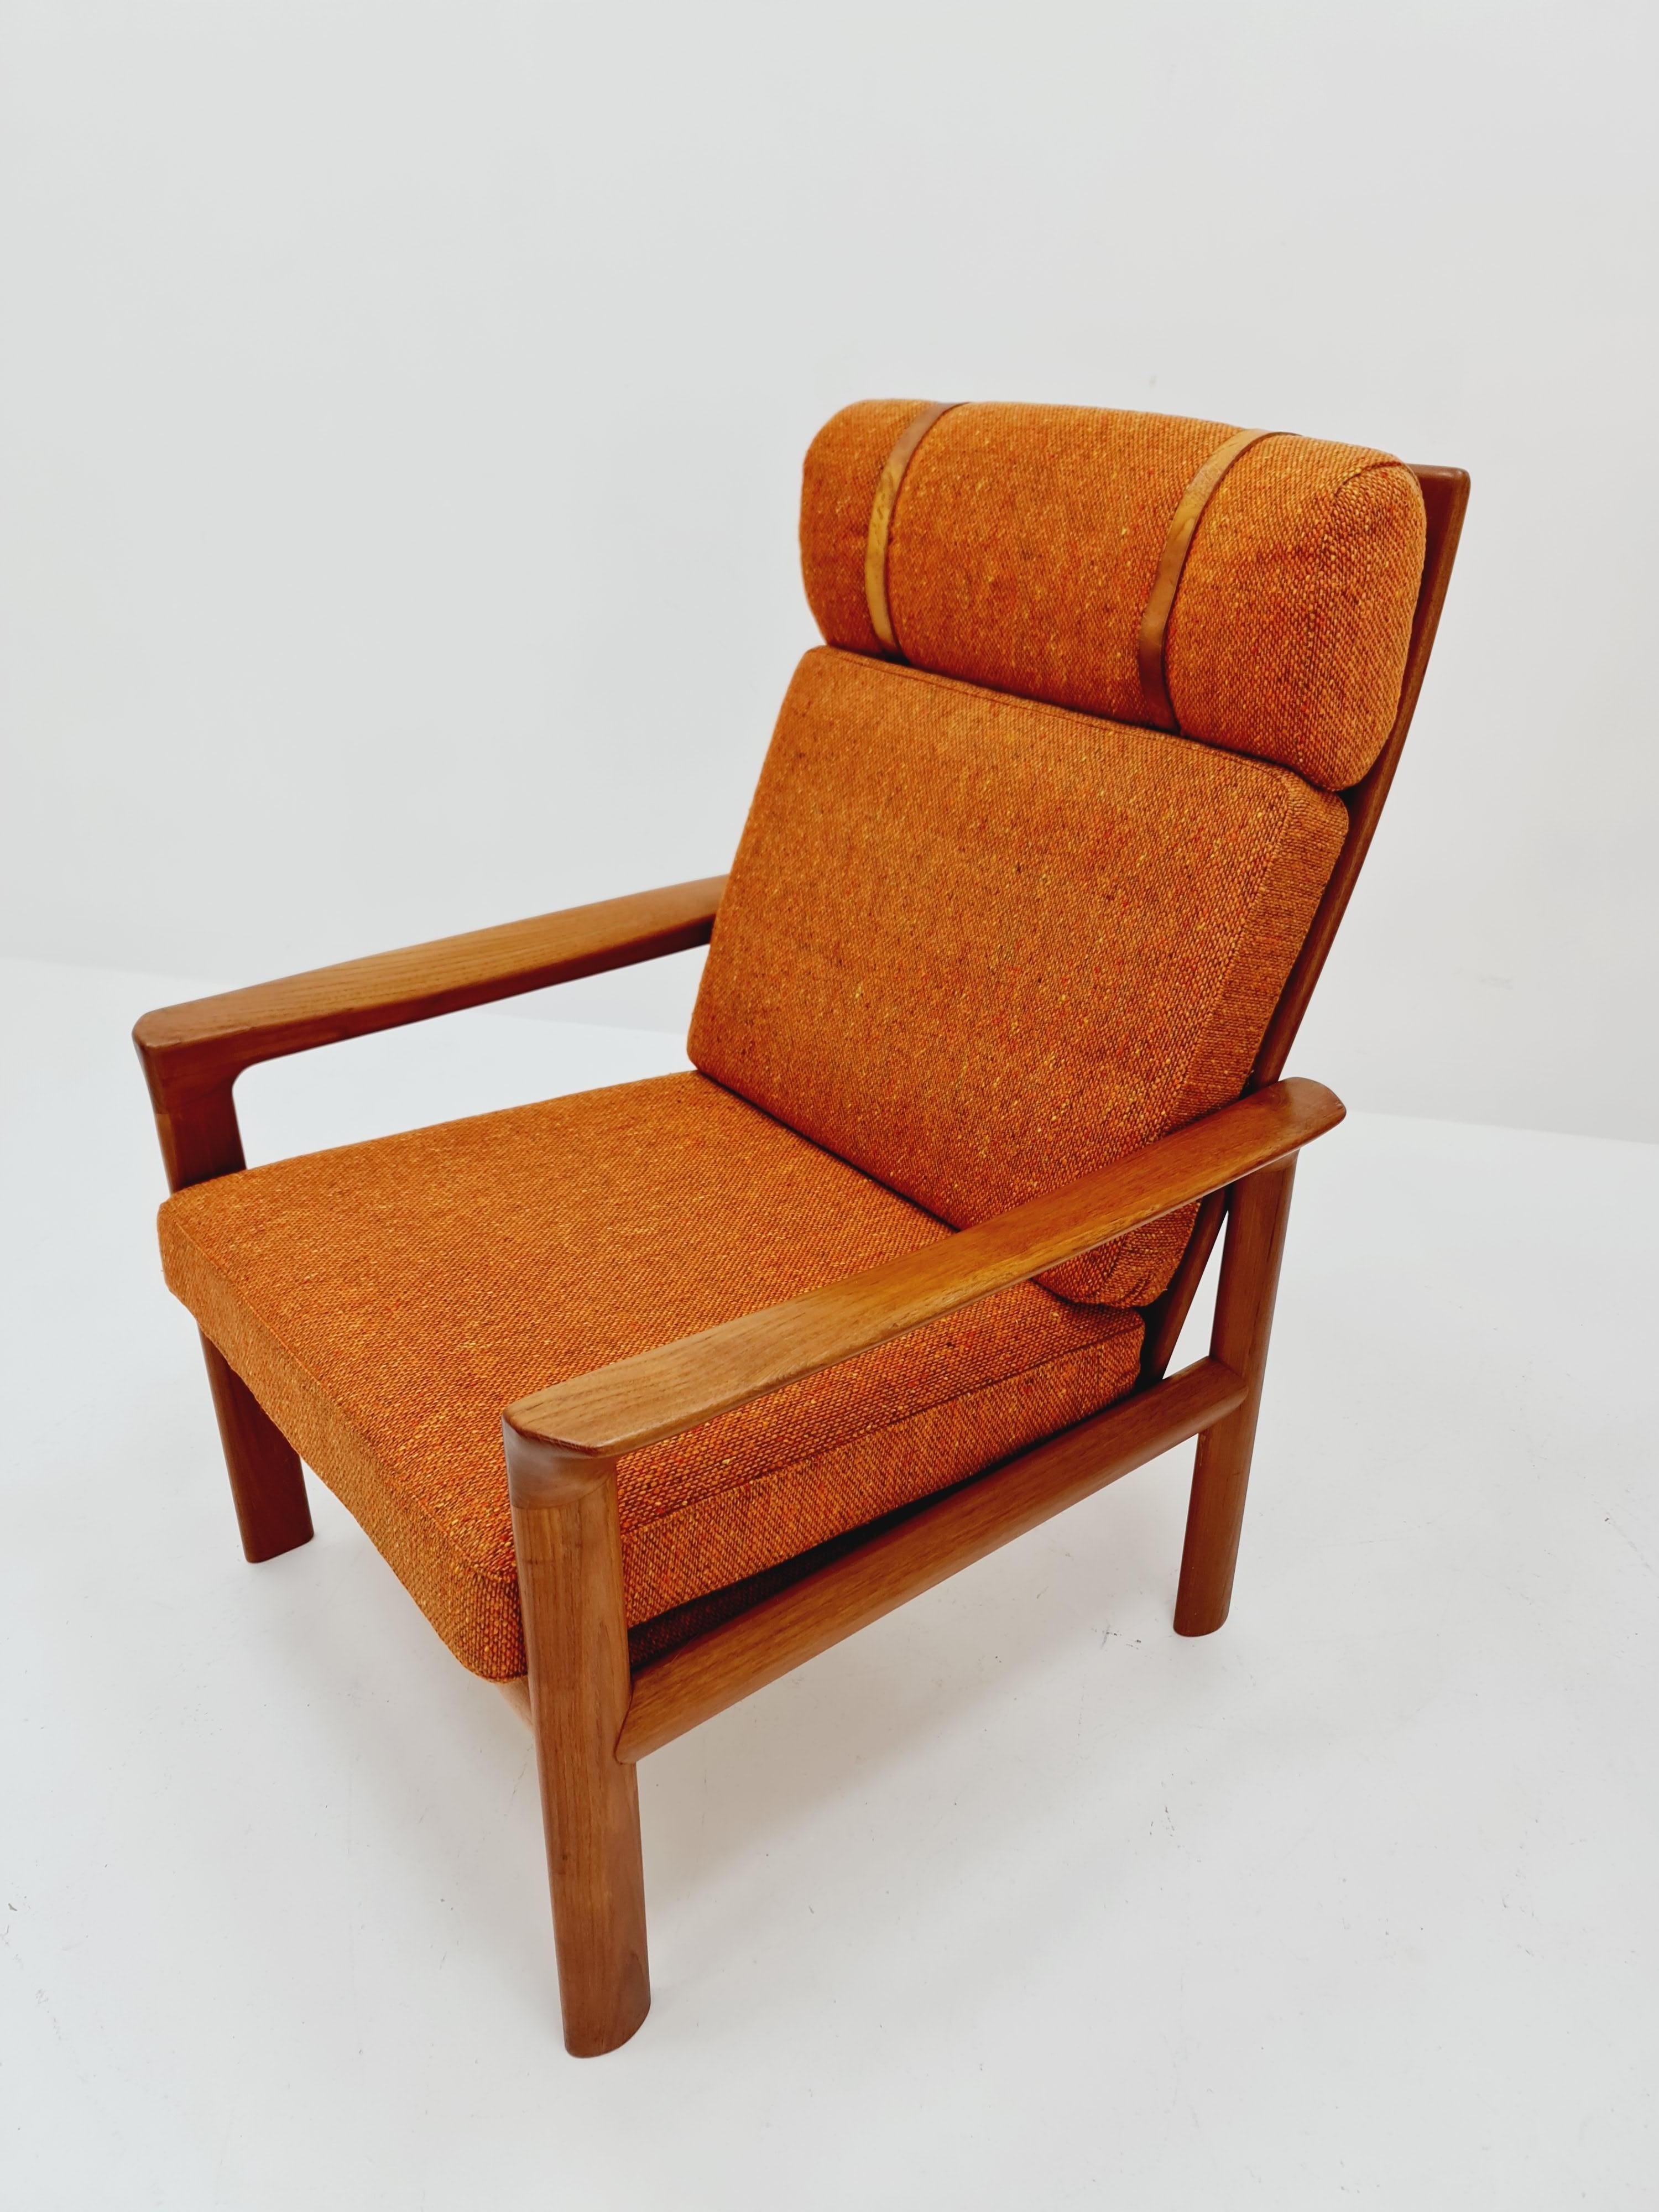 Mid century teak easy lounge high back chairs by Sven Ellekaer for Komfort  For Sale 4